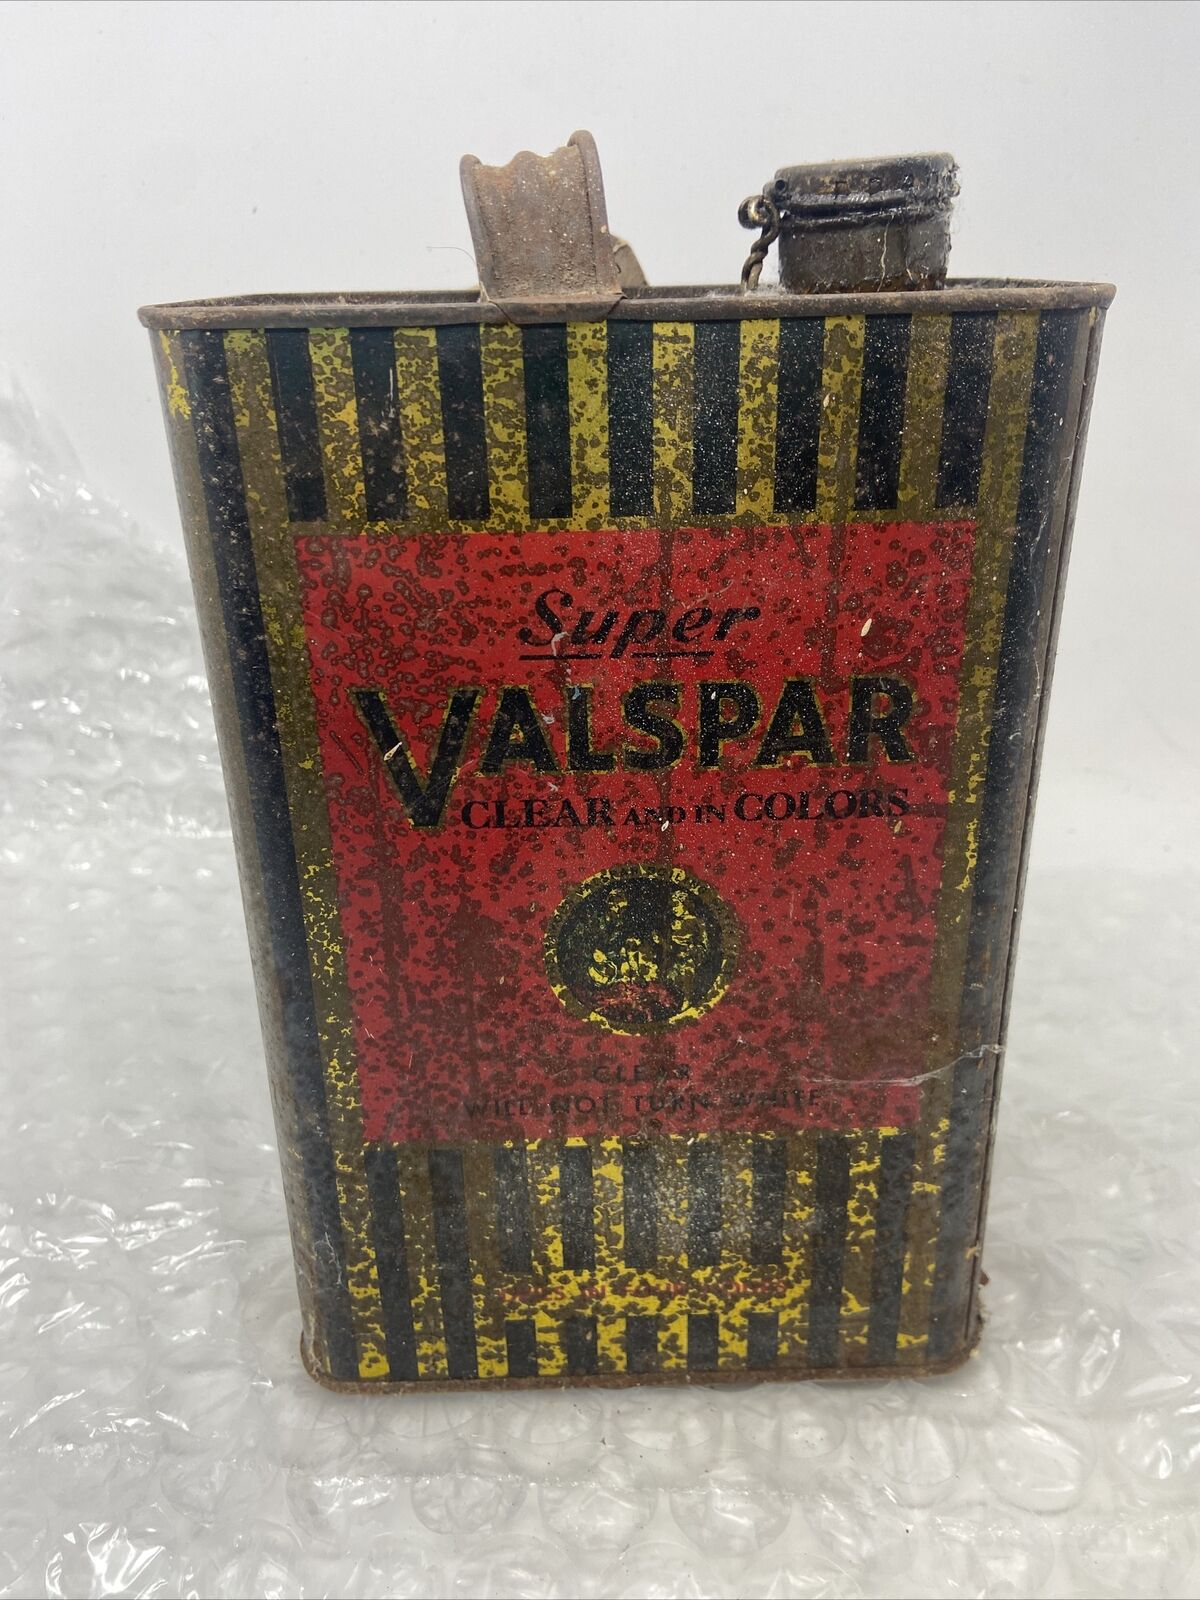 VTG Old Super Valspar CLEAR HALF GALLON METAL EMPTY CAN 